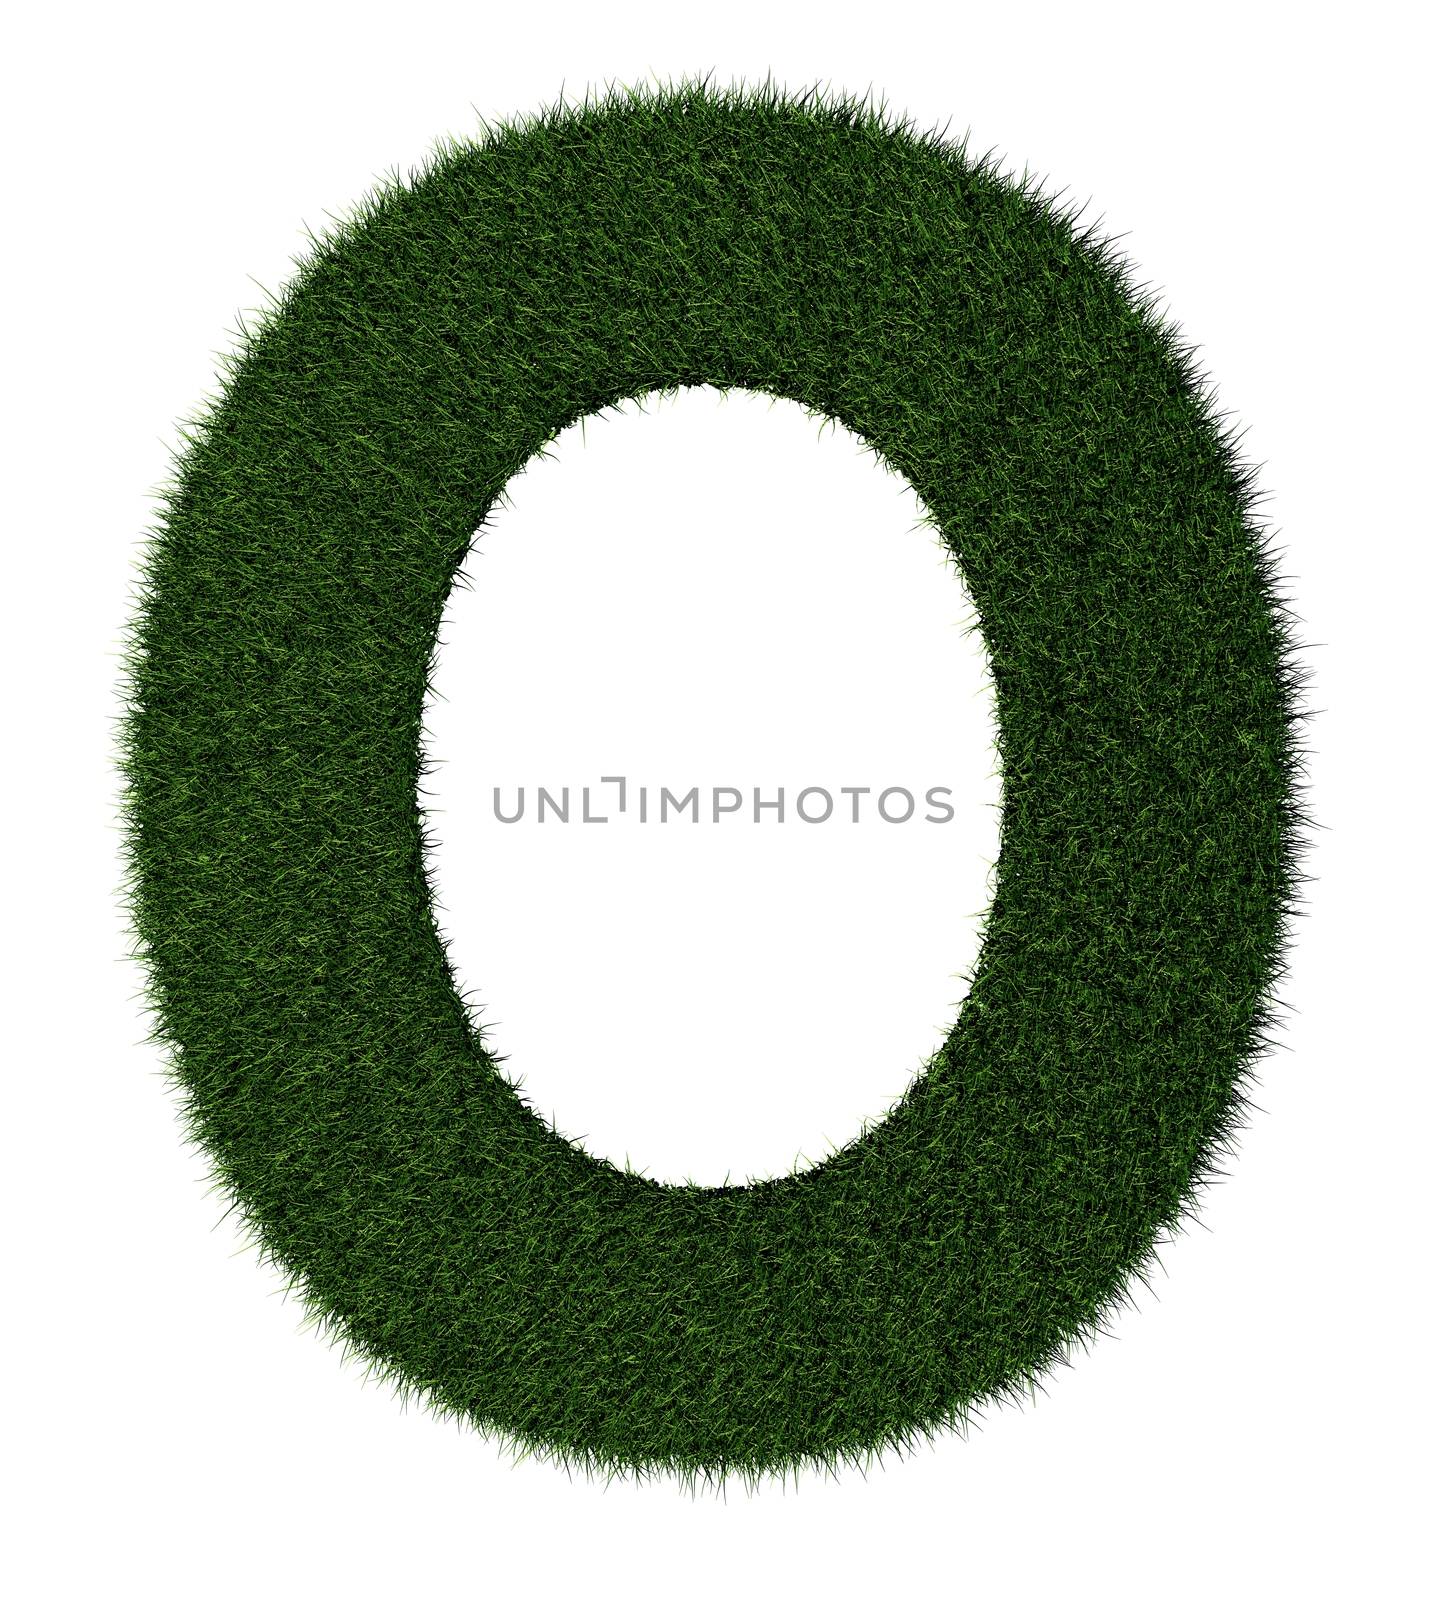 Grass alphabet - O by midani